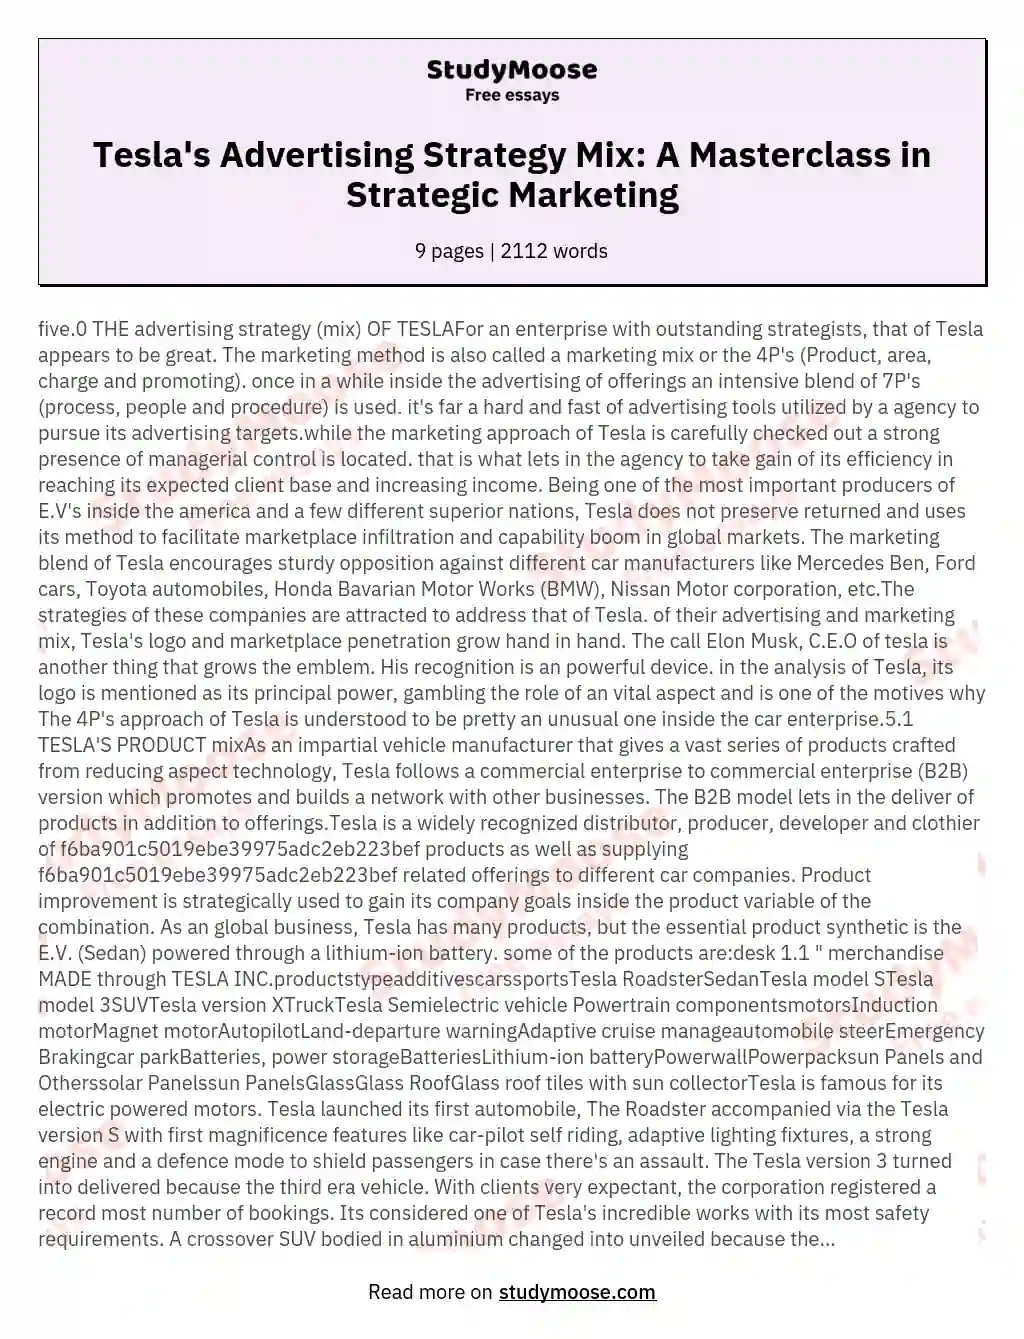 Tesla's Advertising Strategy Mix: A Masterclass in Strategic Marketing essay